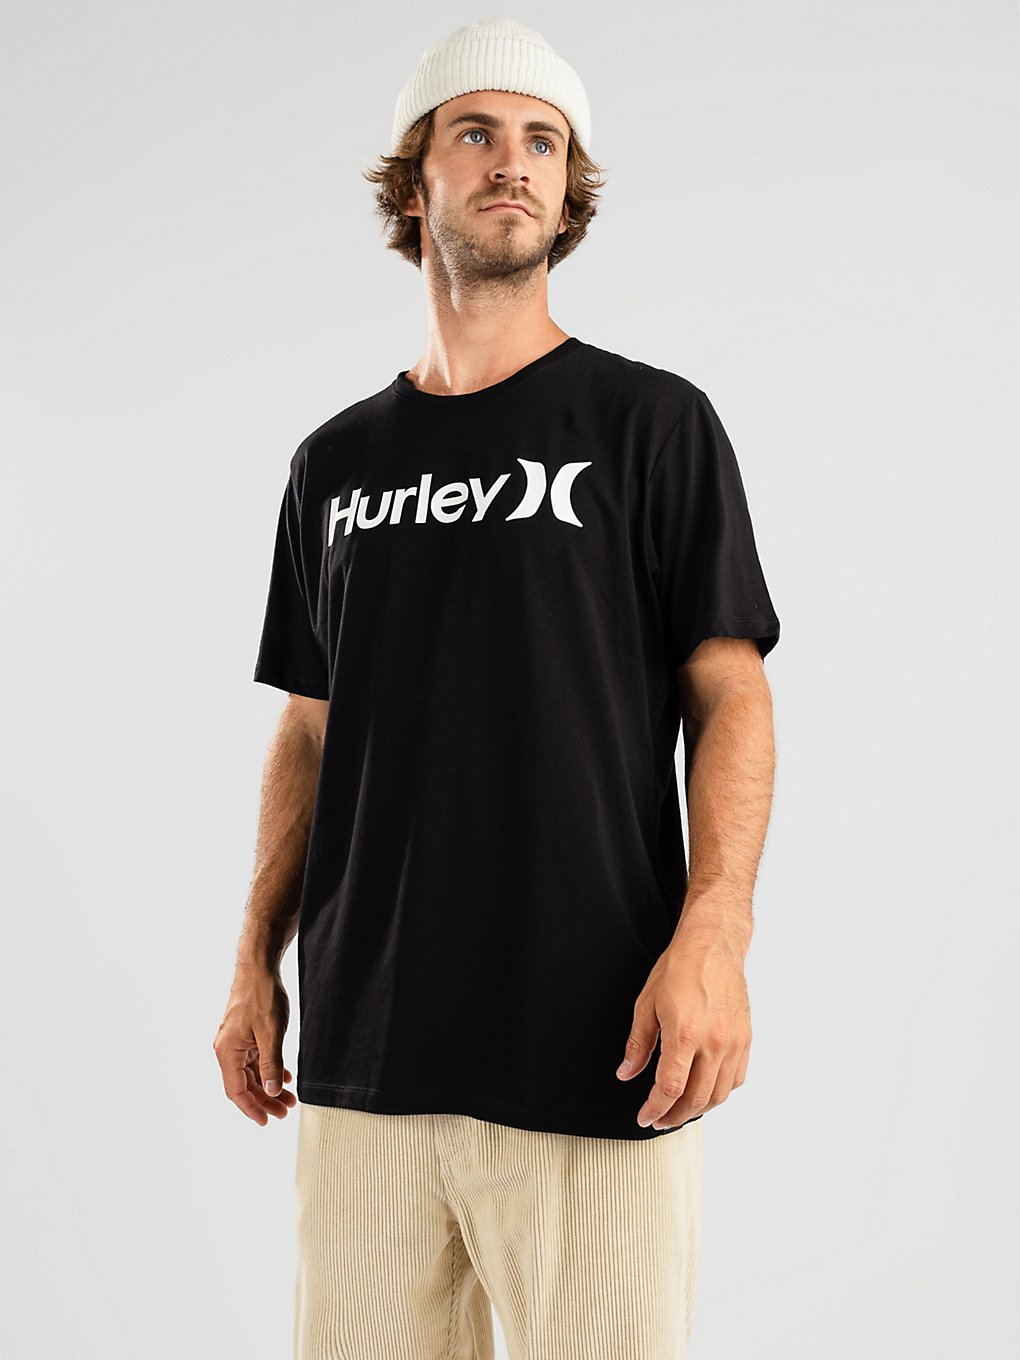 Hurley Evd Wsh Oao Solid T-Shirt black kaufen